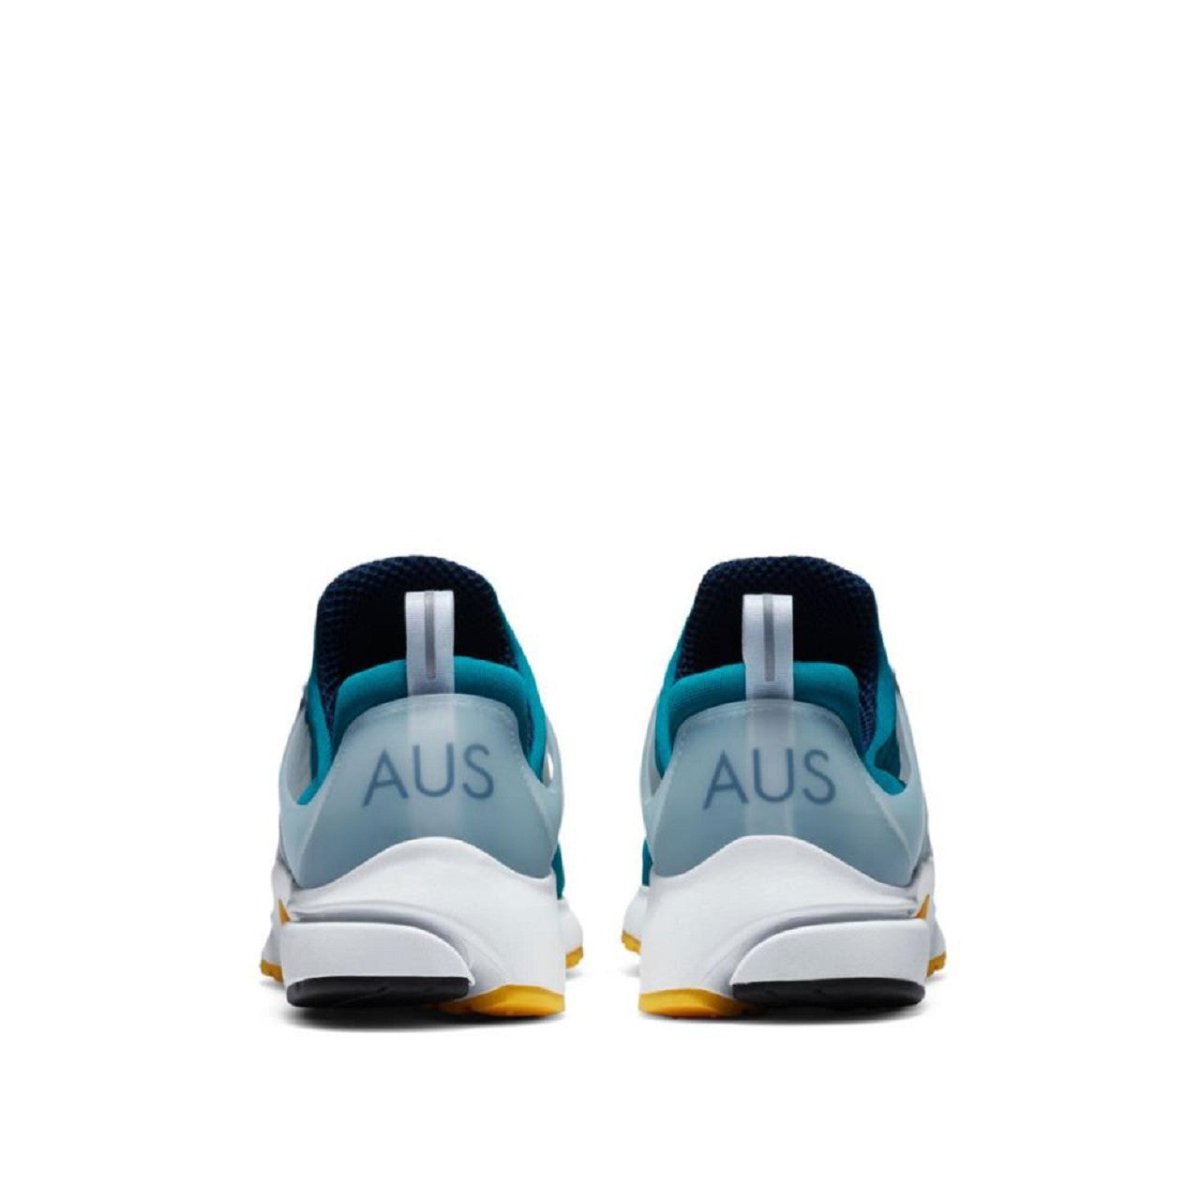 Nike Air Presto 'Australia Olympic' (Türkis / Weiß / Gelb)  - Allike Store